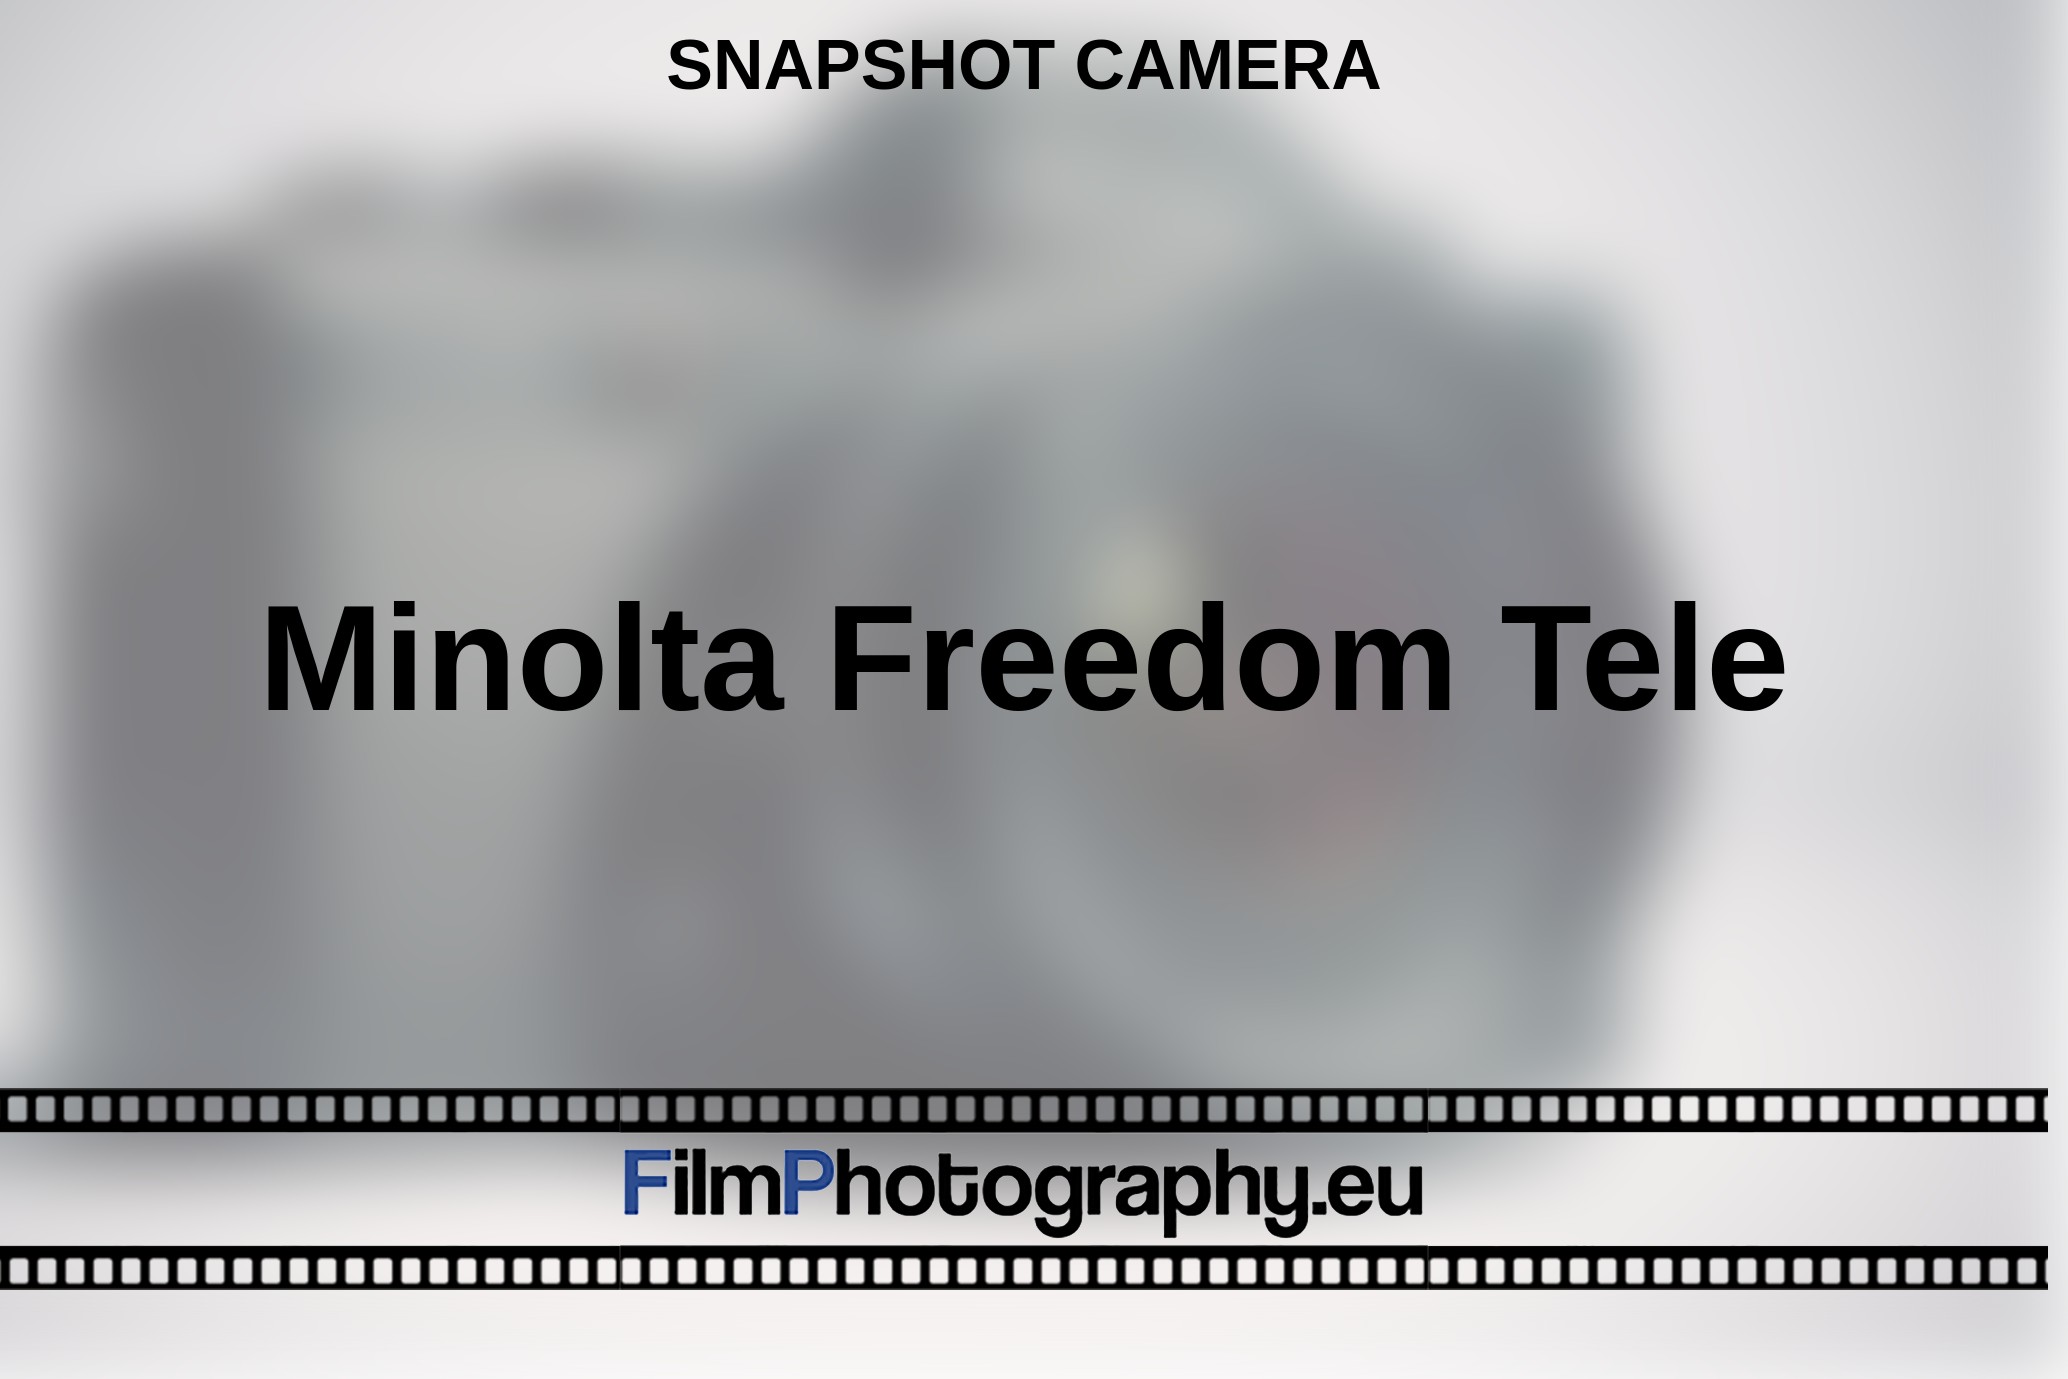 Minolta-Freedom-Tele-snapshot-camera-bnv.jpg